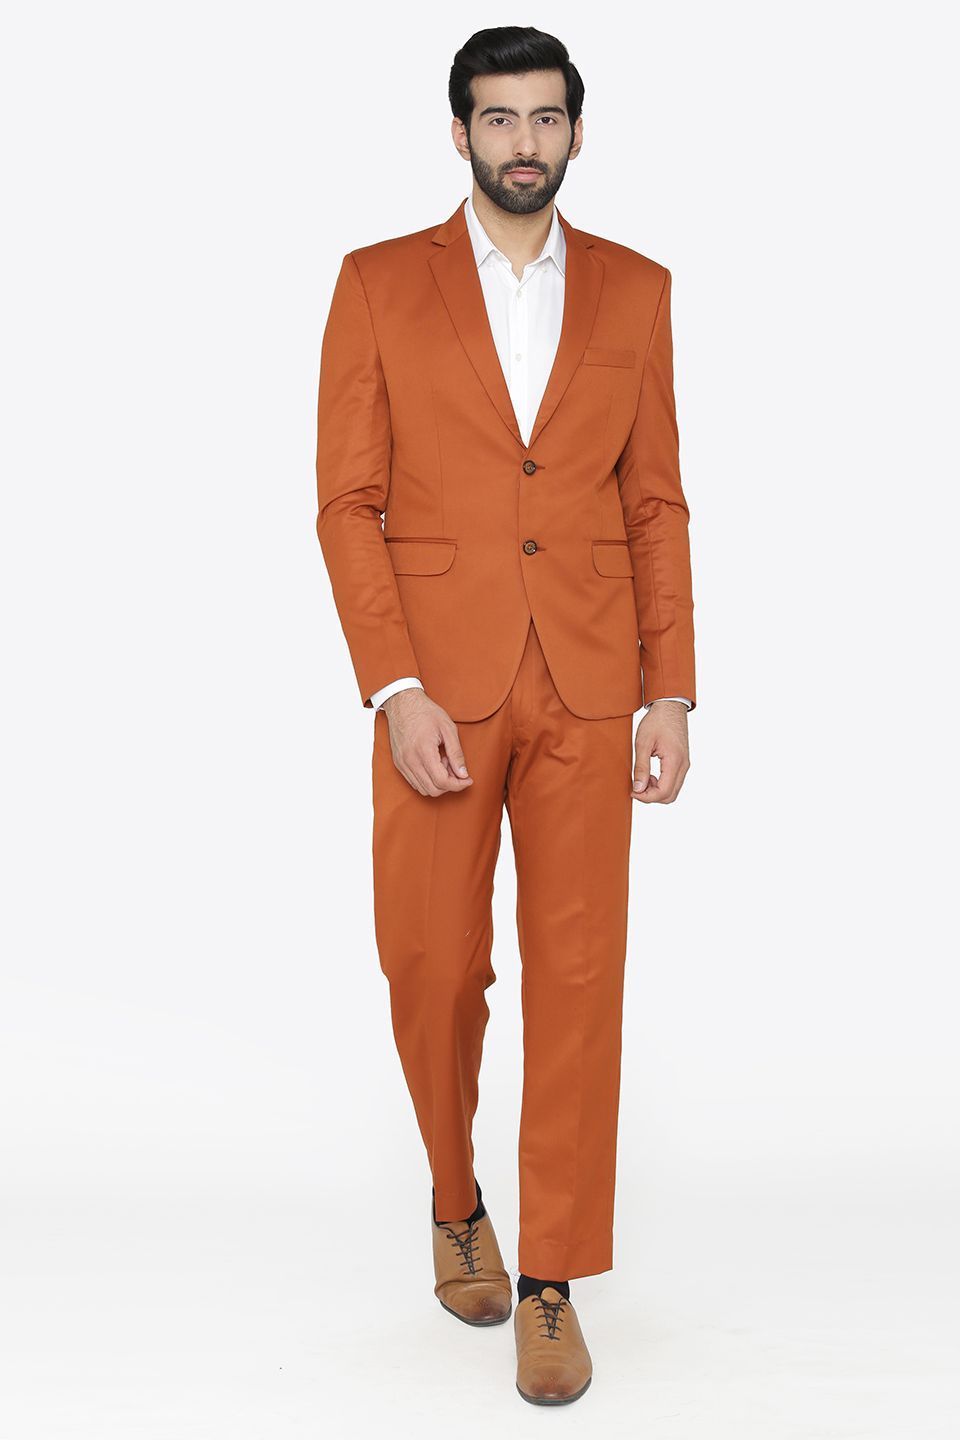 Polyester Cotton Orange Suit